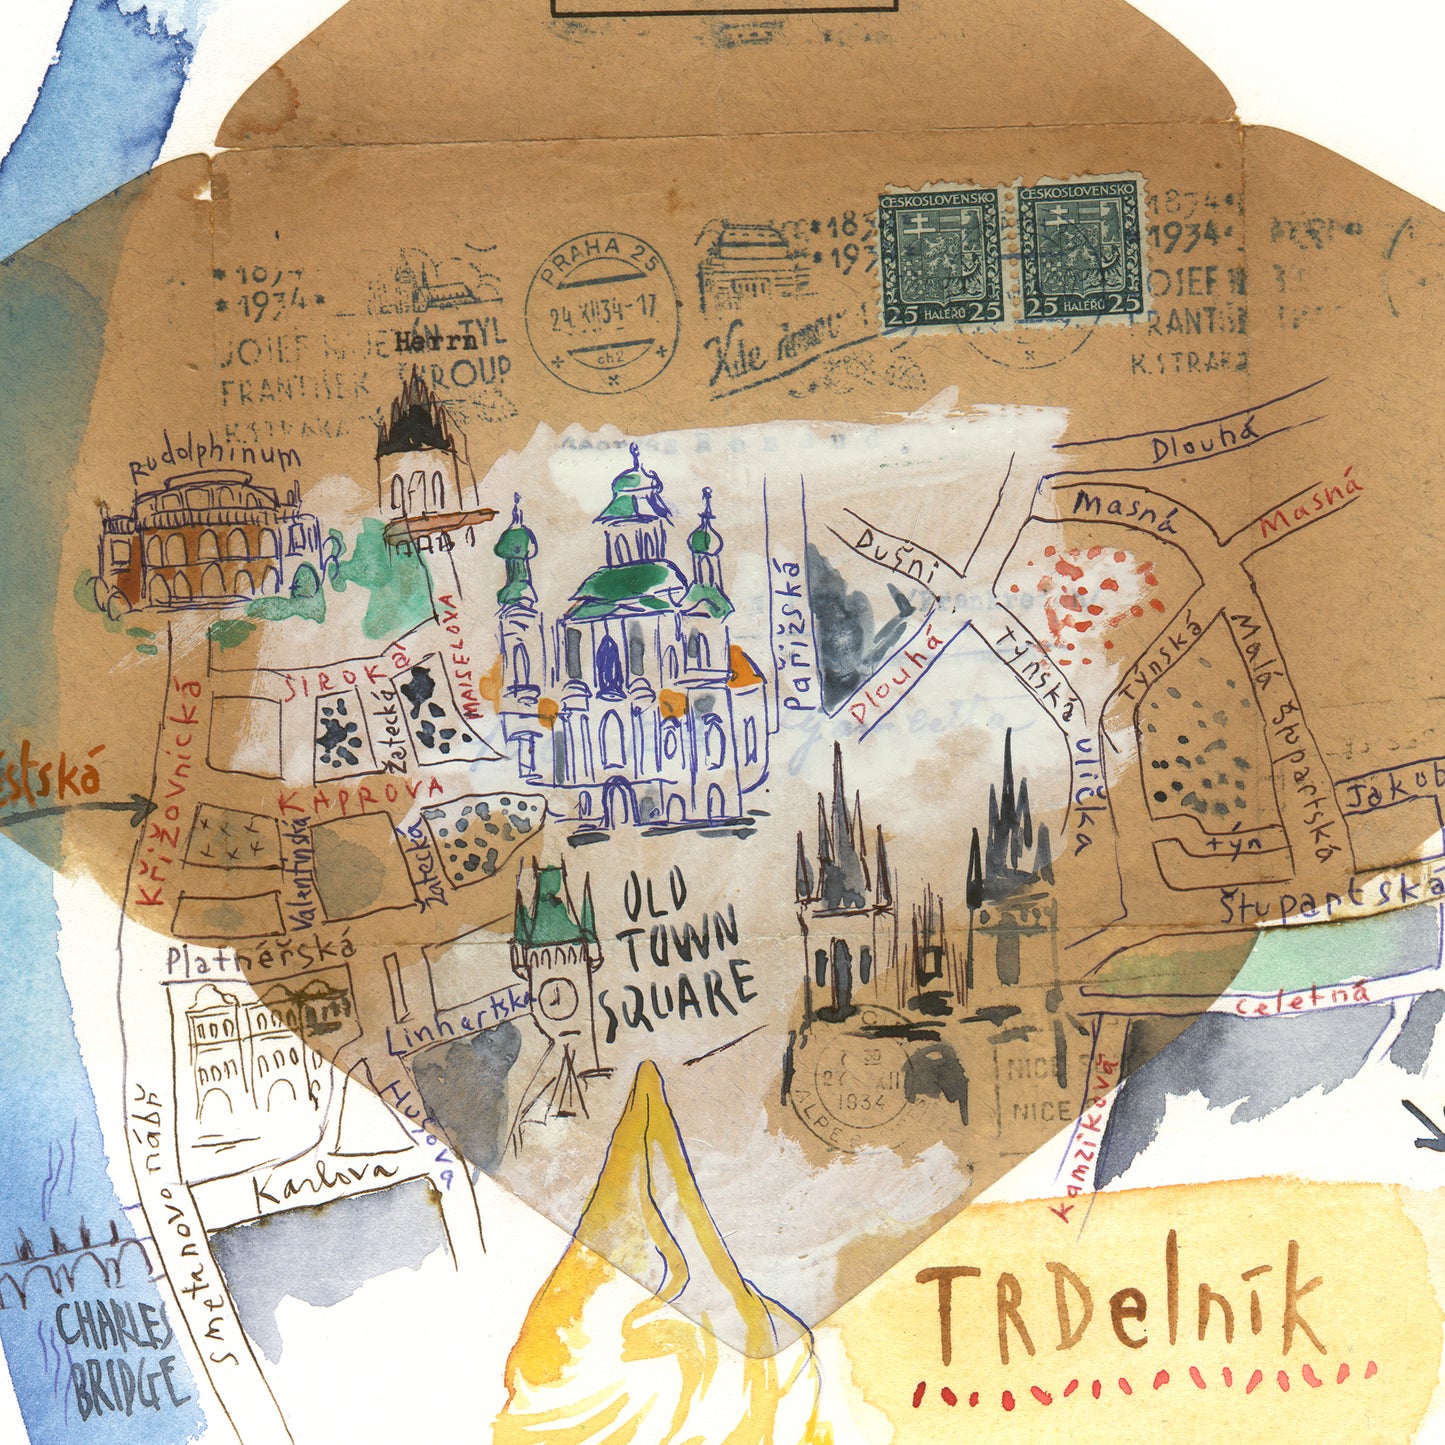 Trdelnik recipe on Prague illustrated map